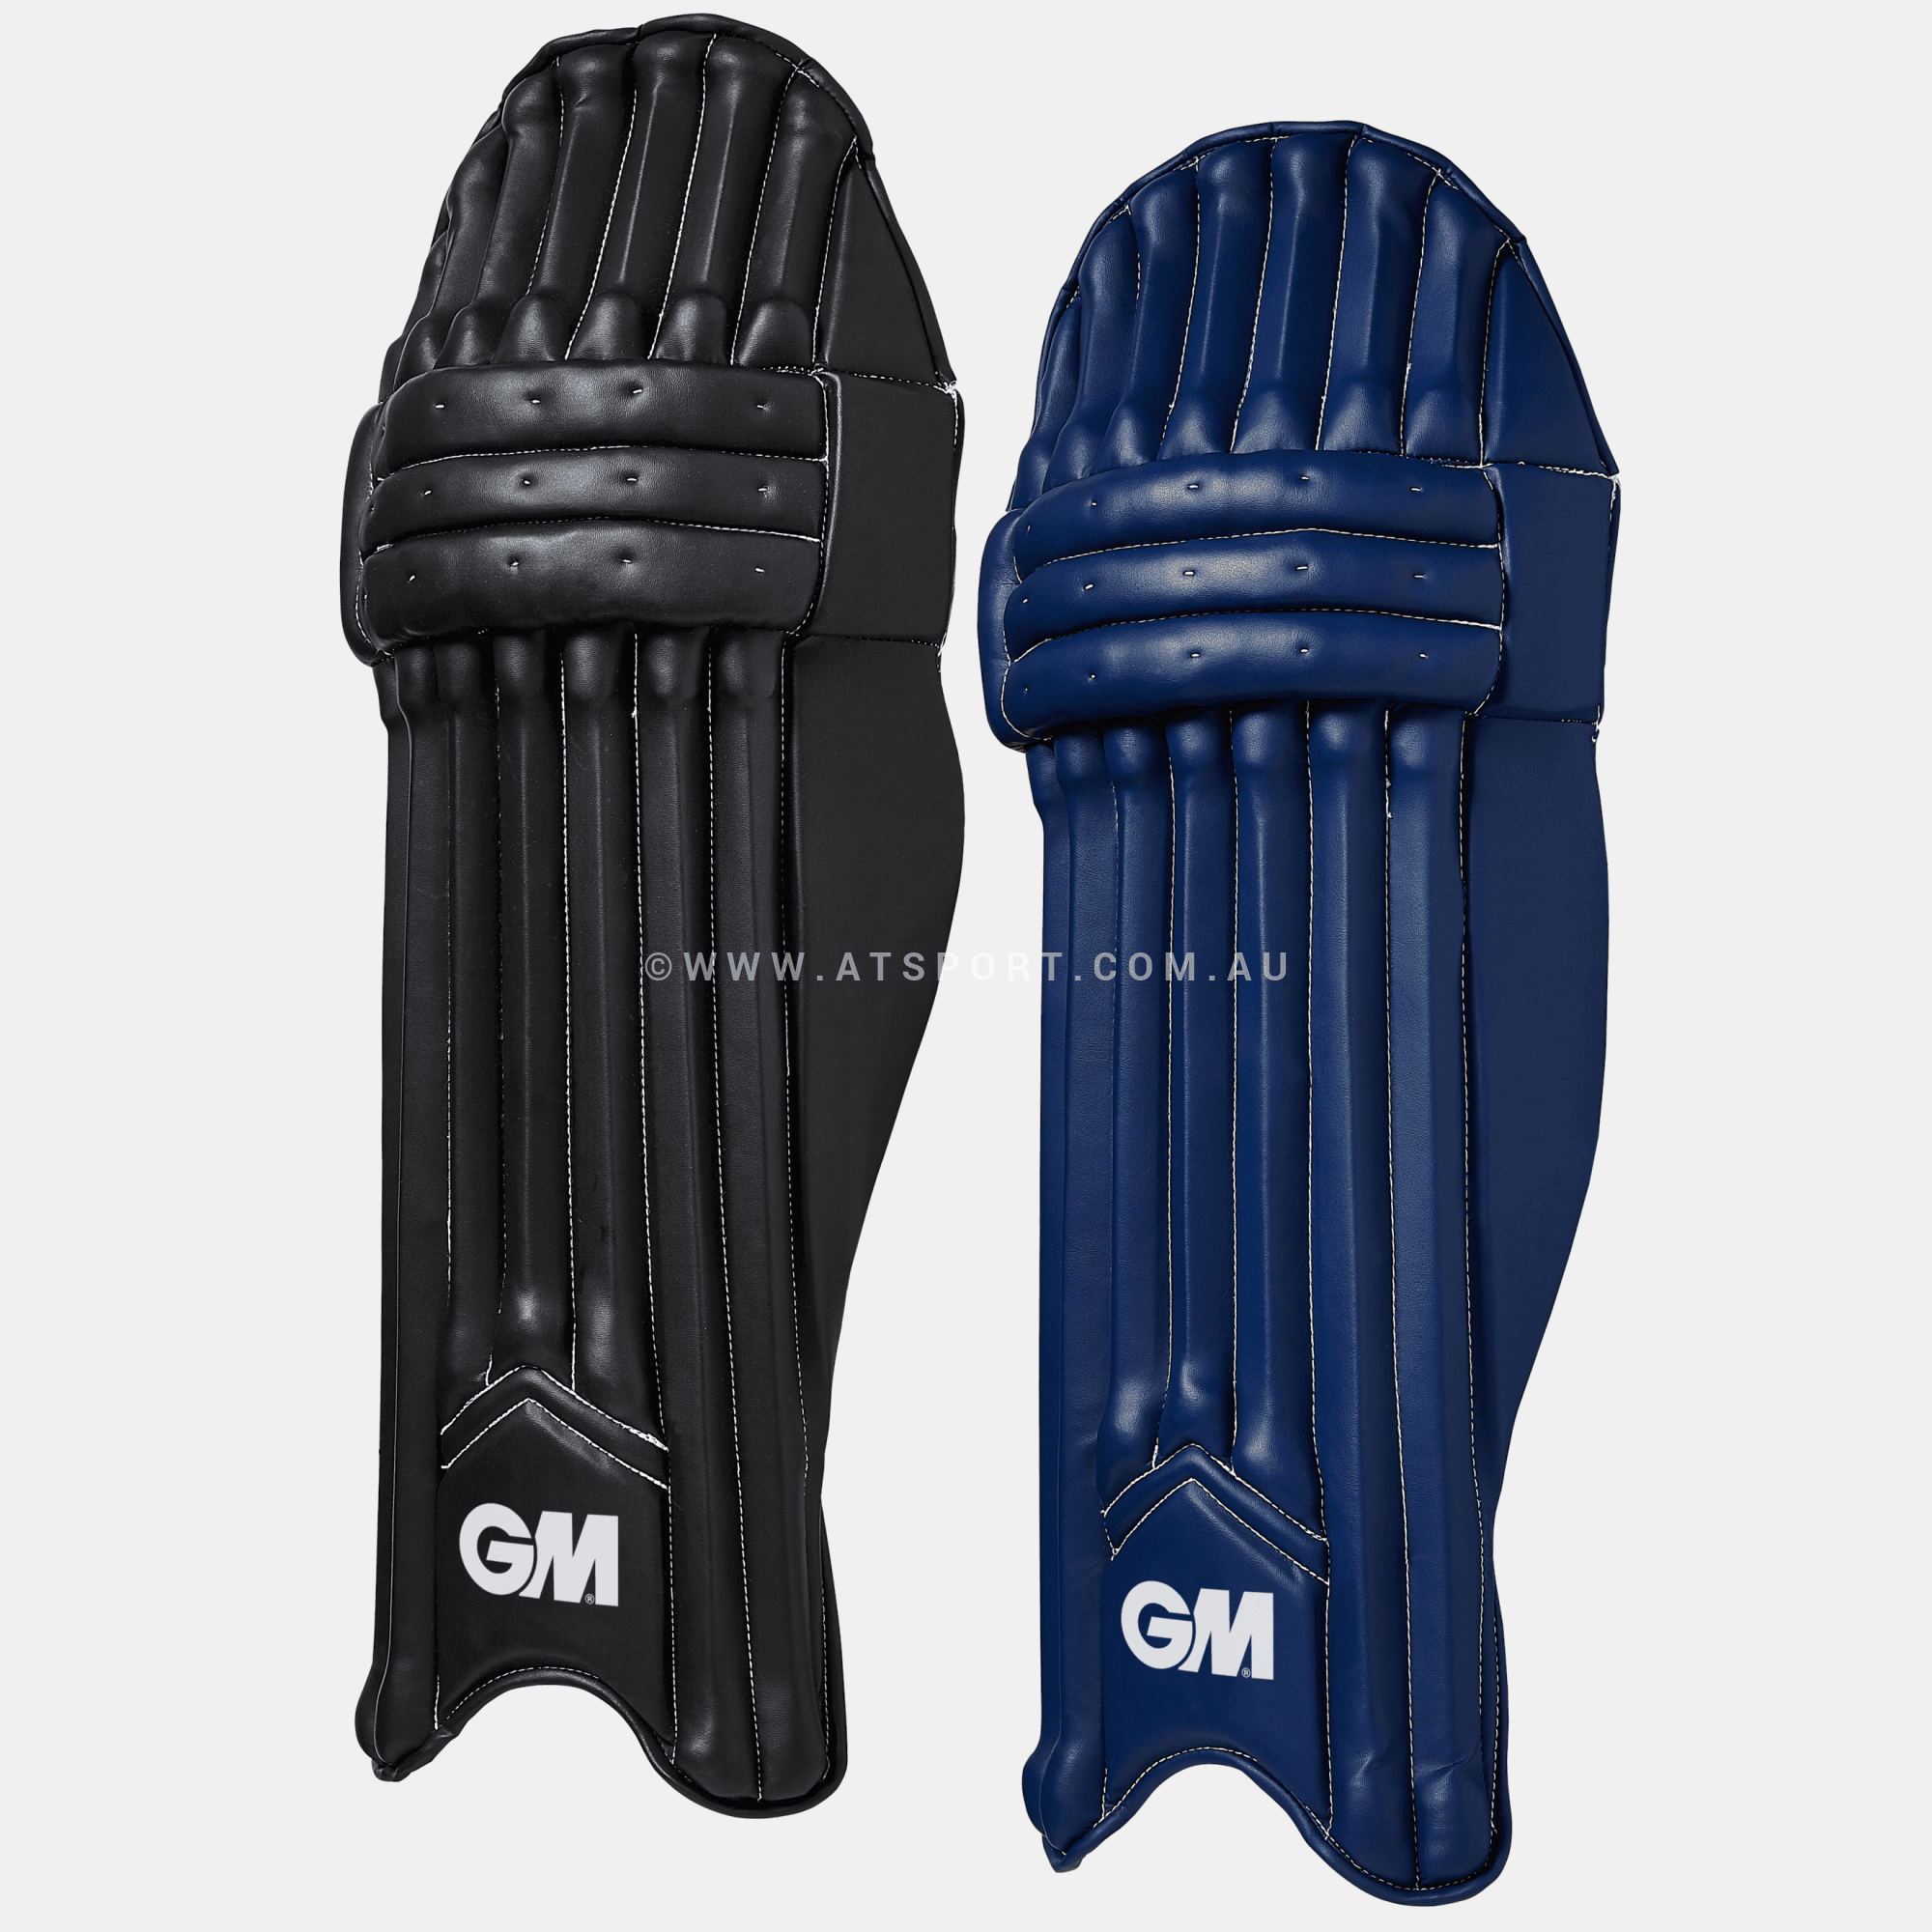 Gm Maxi 606 Coloured Cricket Batting Pads - Adult